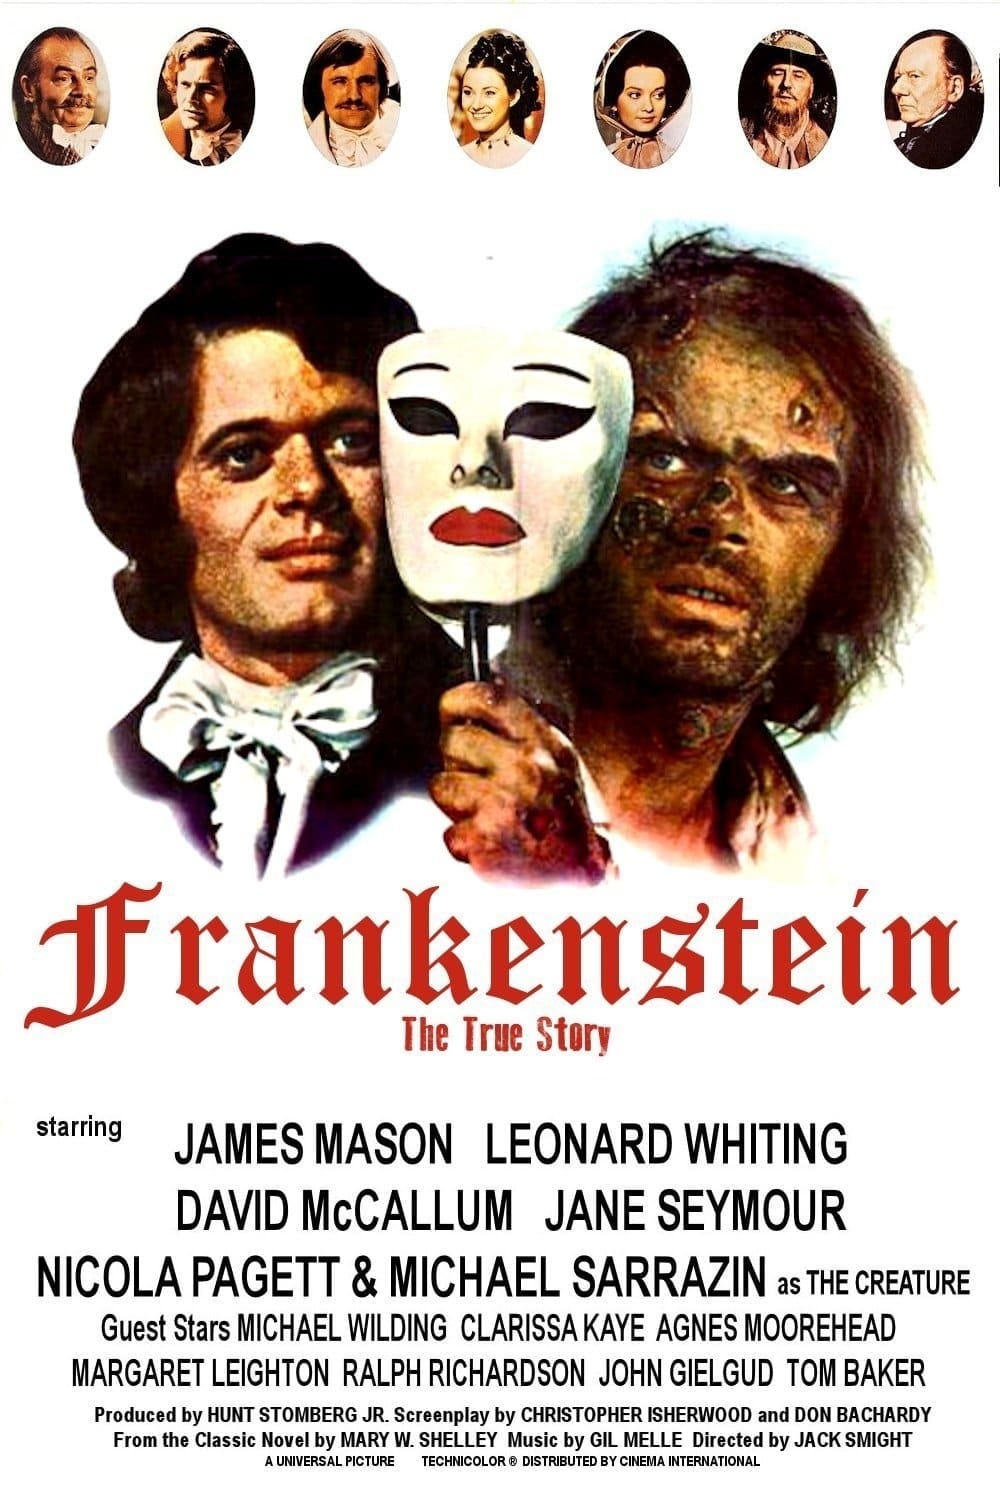 EN - Frankenstein: The True Story (1974)